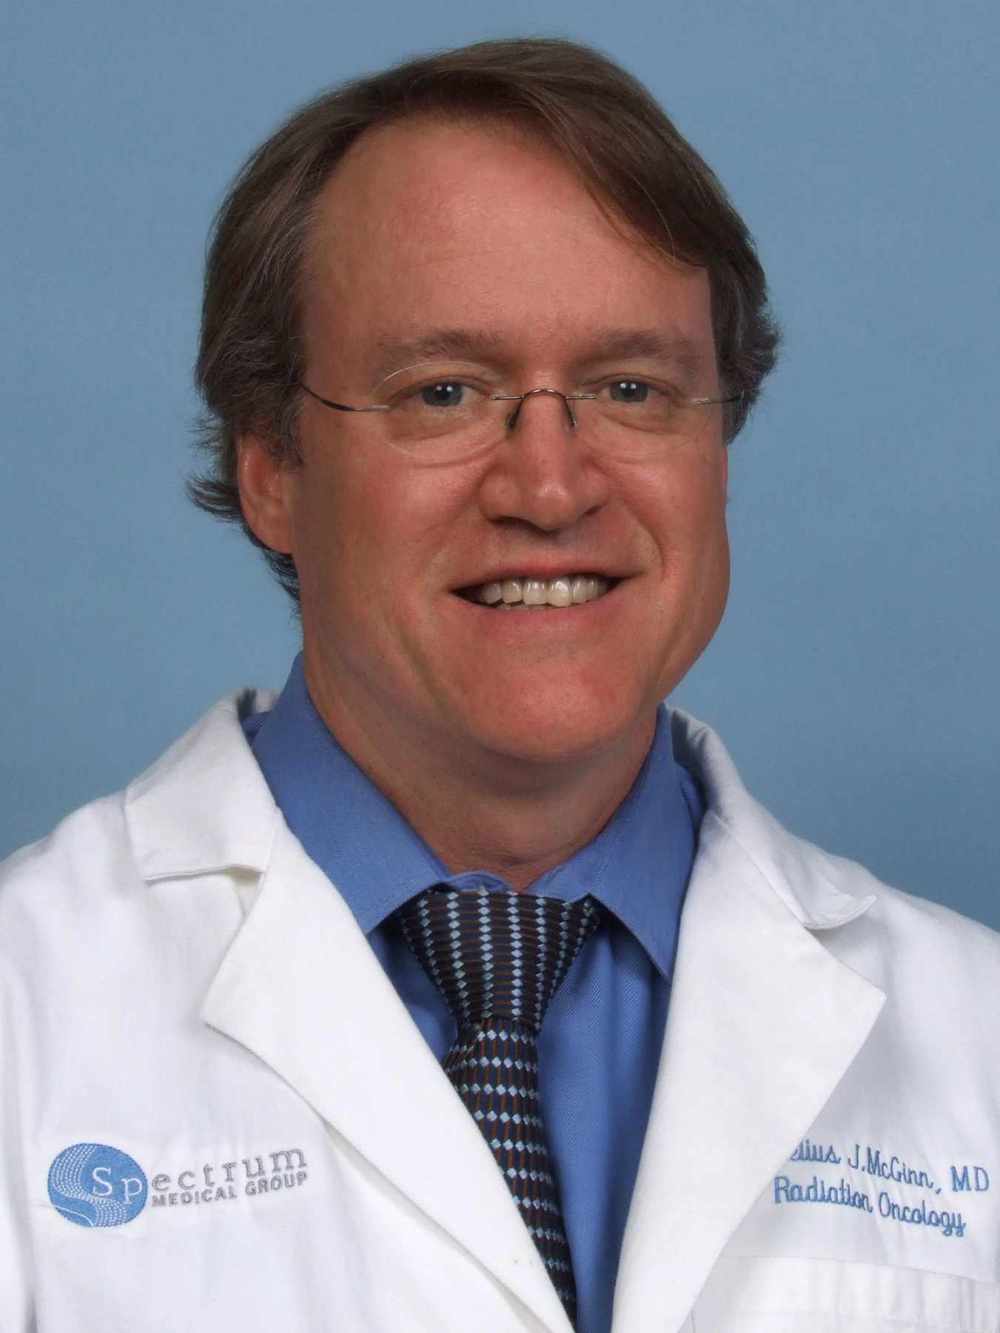 Dr. Cornelius J McGinn, MD